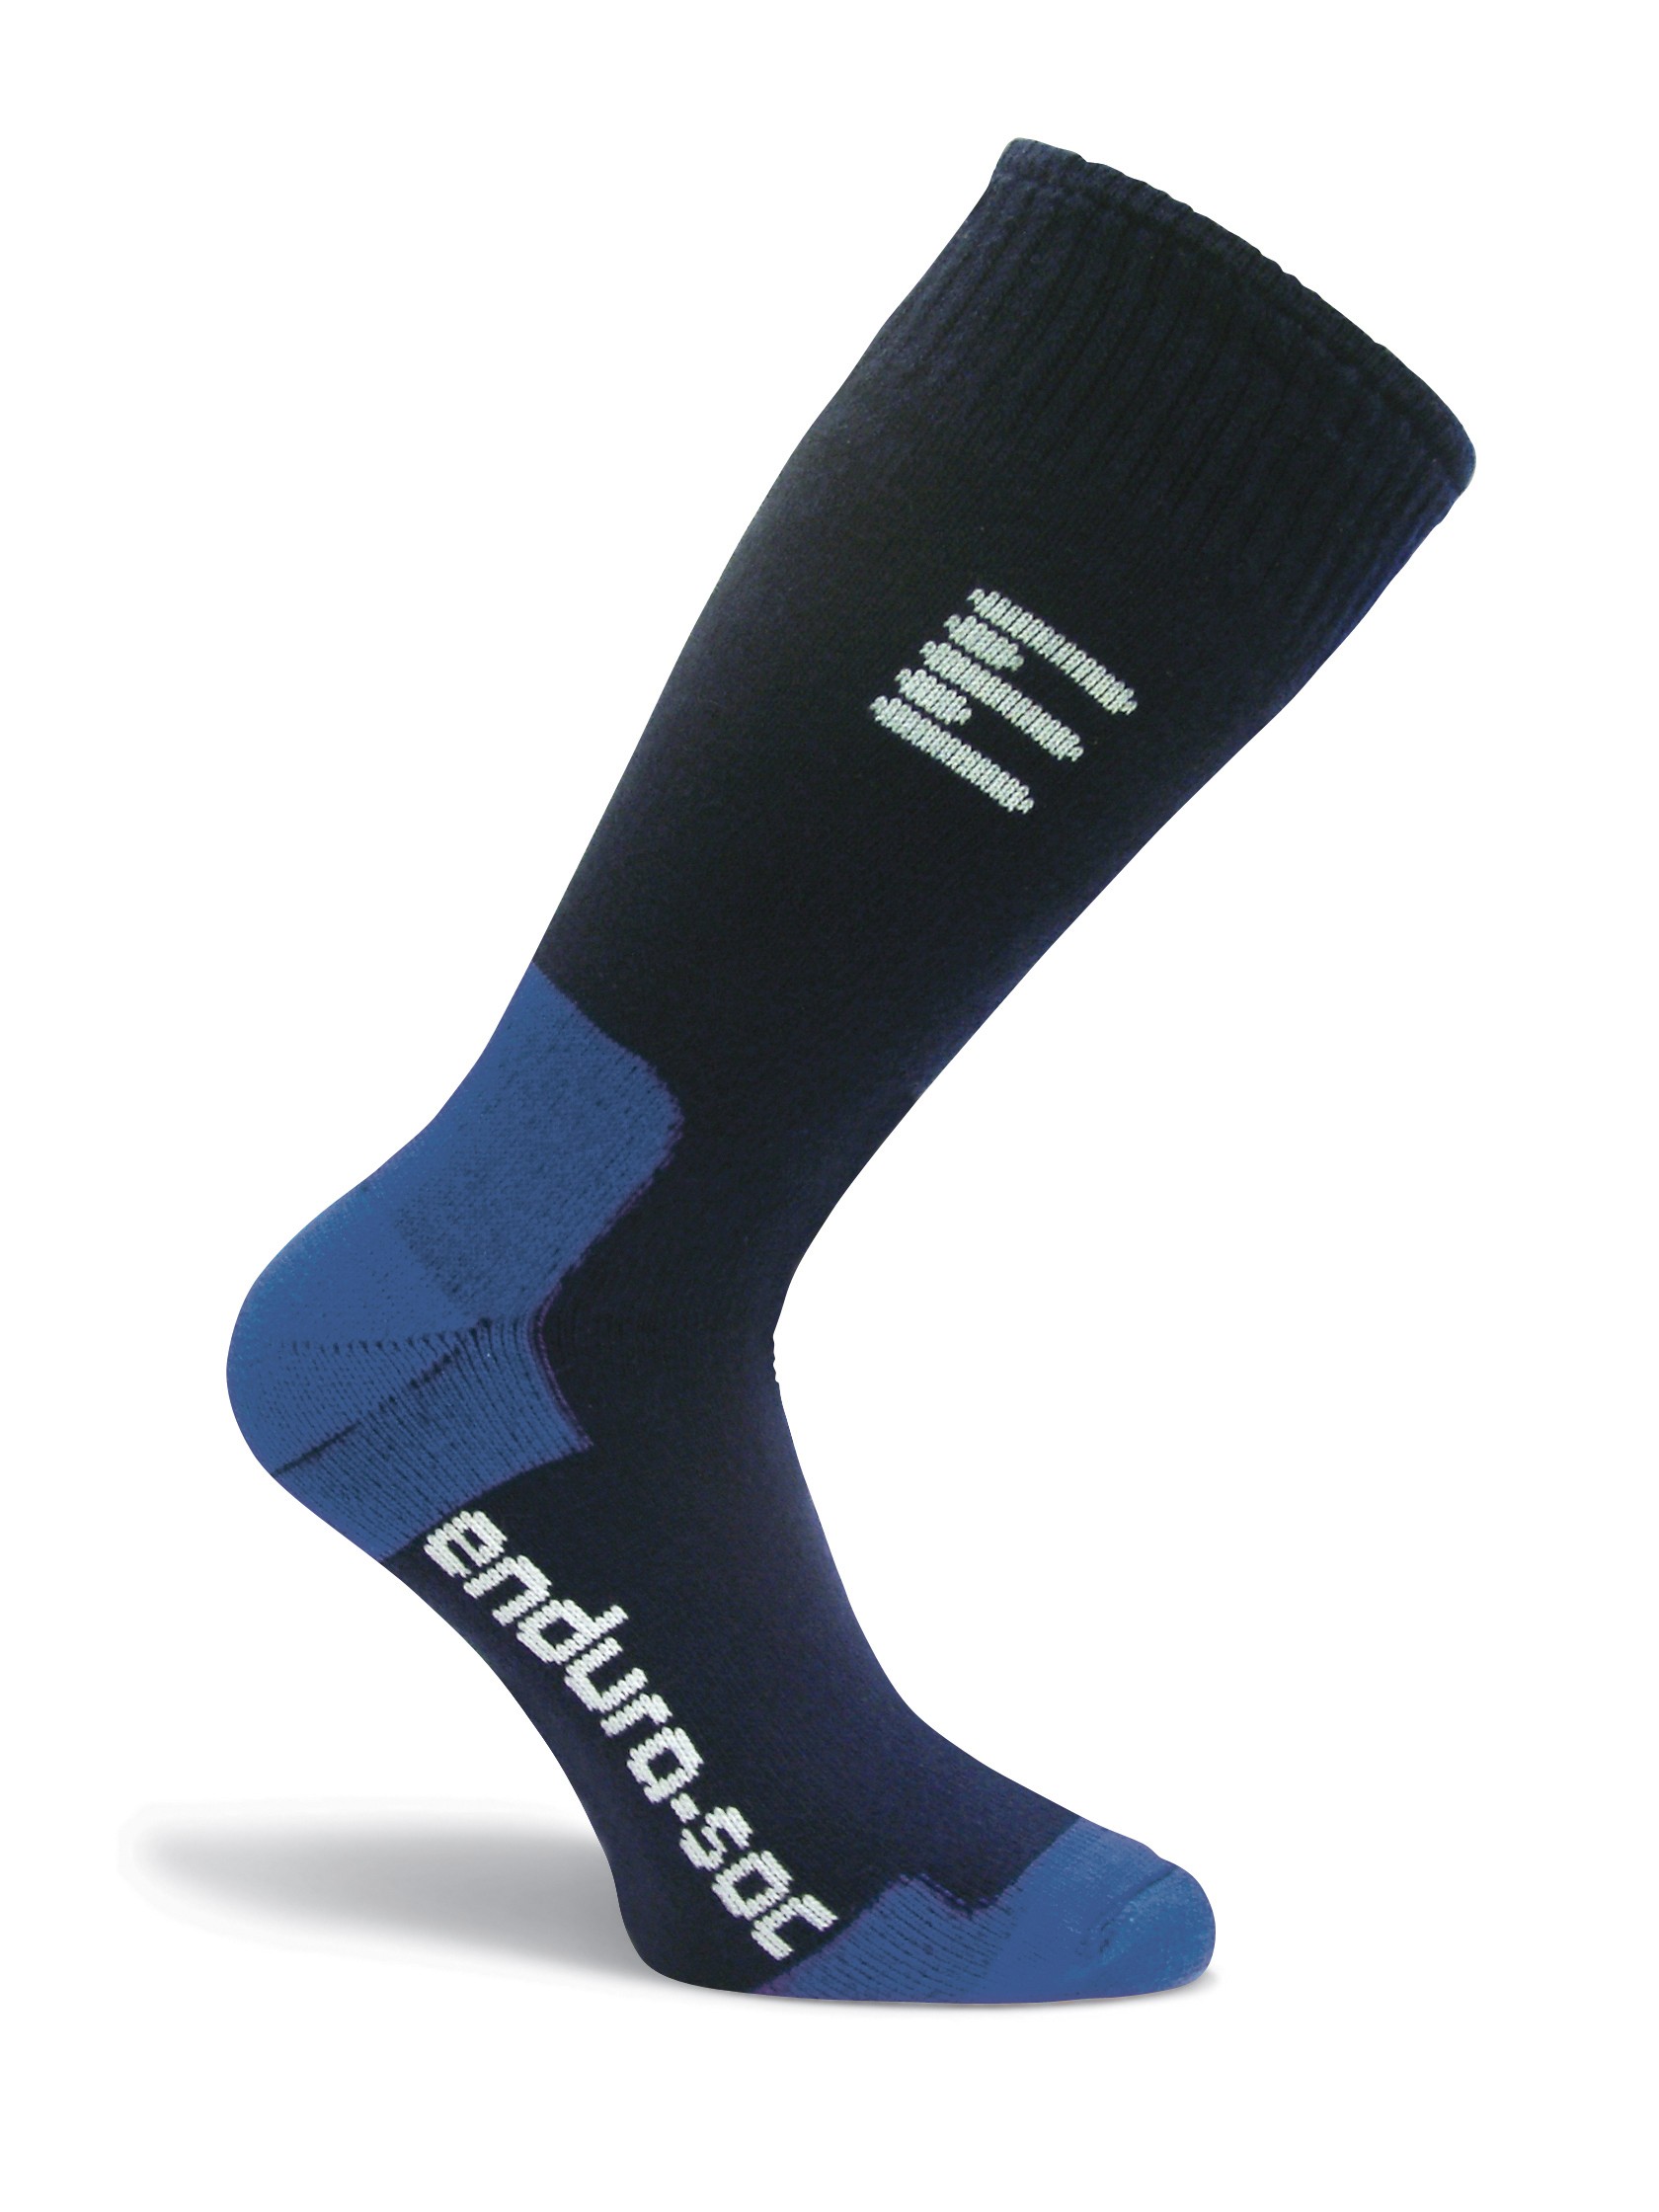 V-Tech ESOK6 Navy Blue Socks